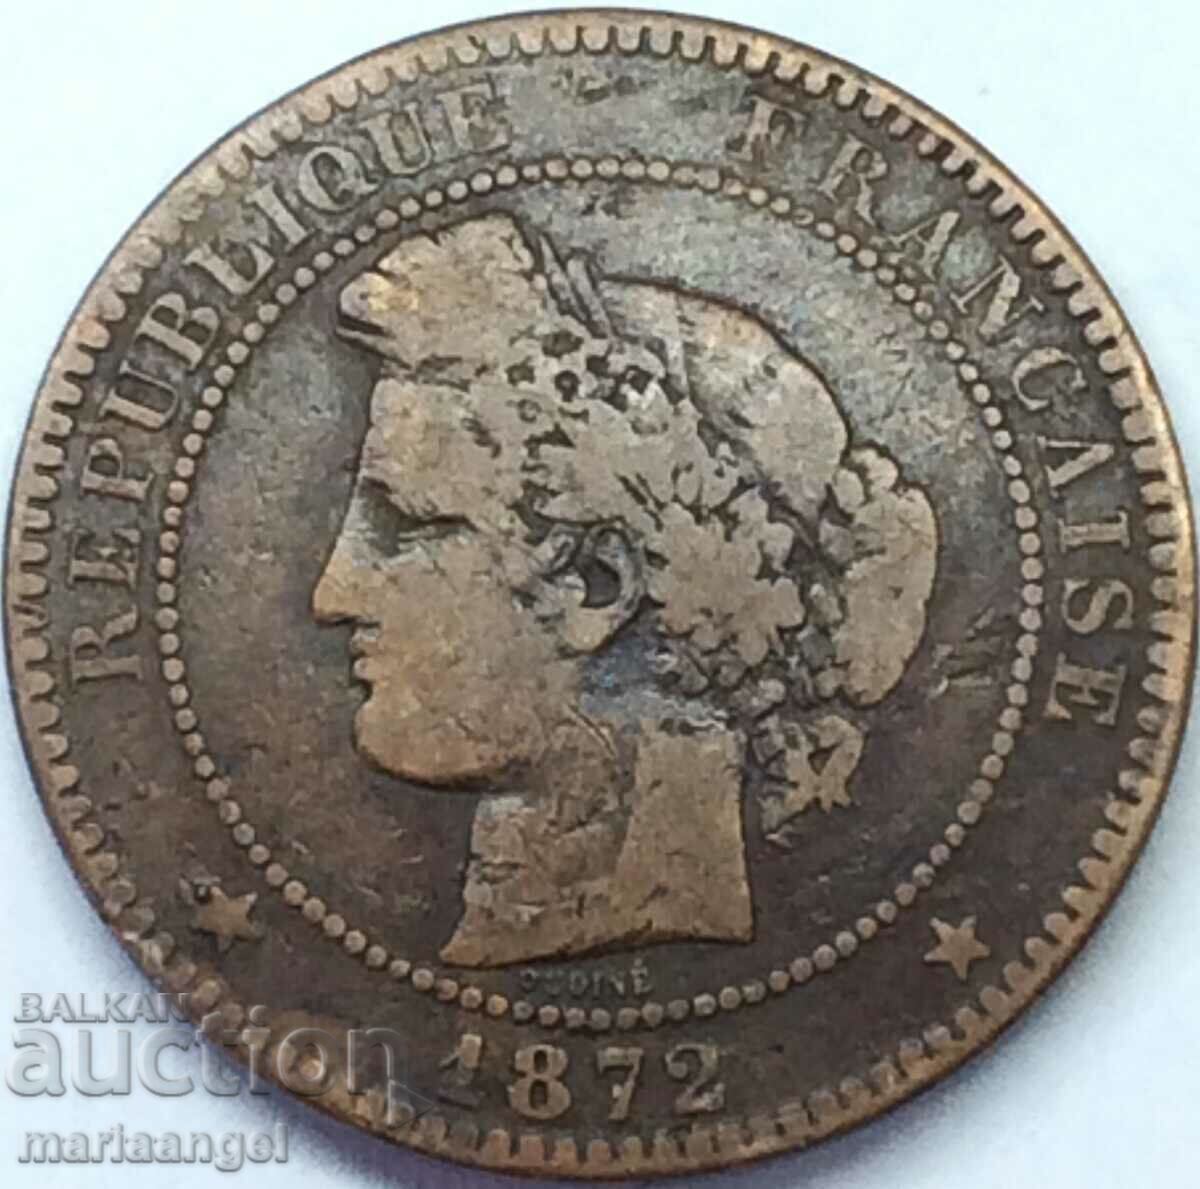 France 10 centimes 1872